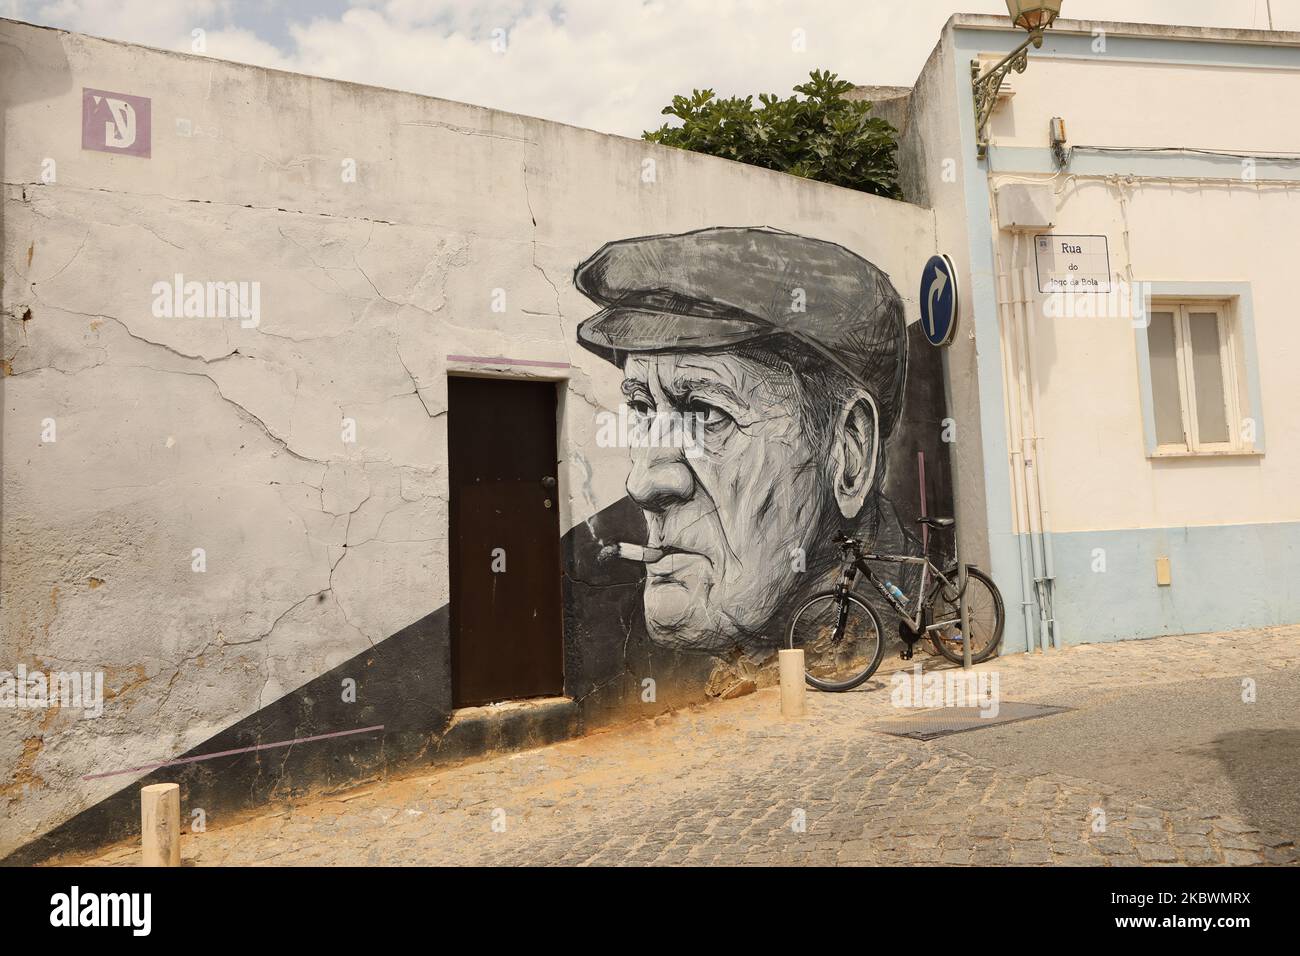 The smoking man mural, Lagos, Algarve, Portugal Stock Photo